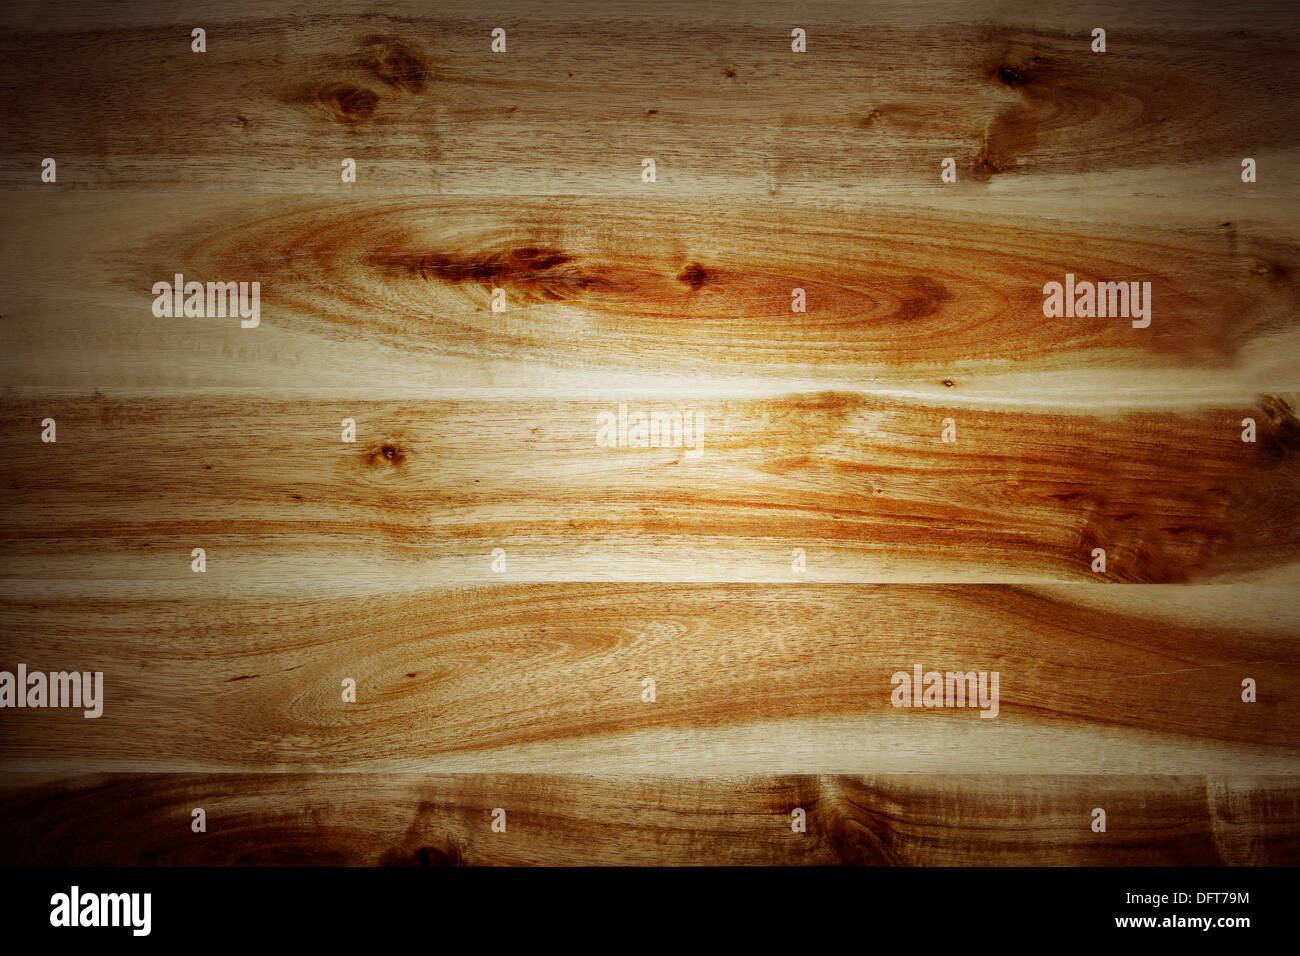 Closeup of wooden surface, dark edges Stock Photo